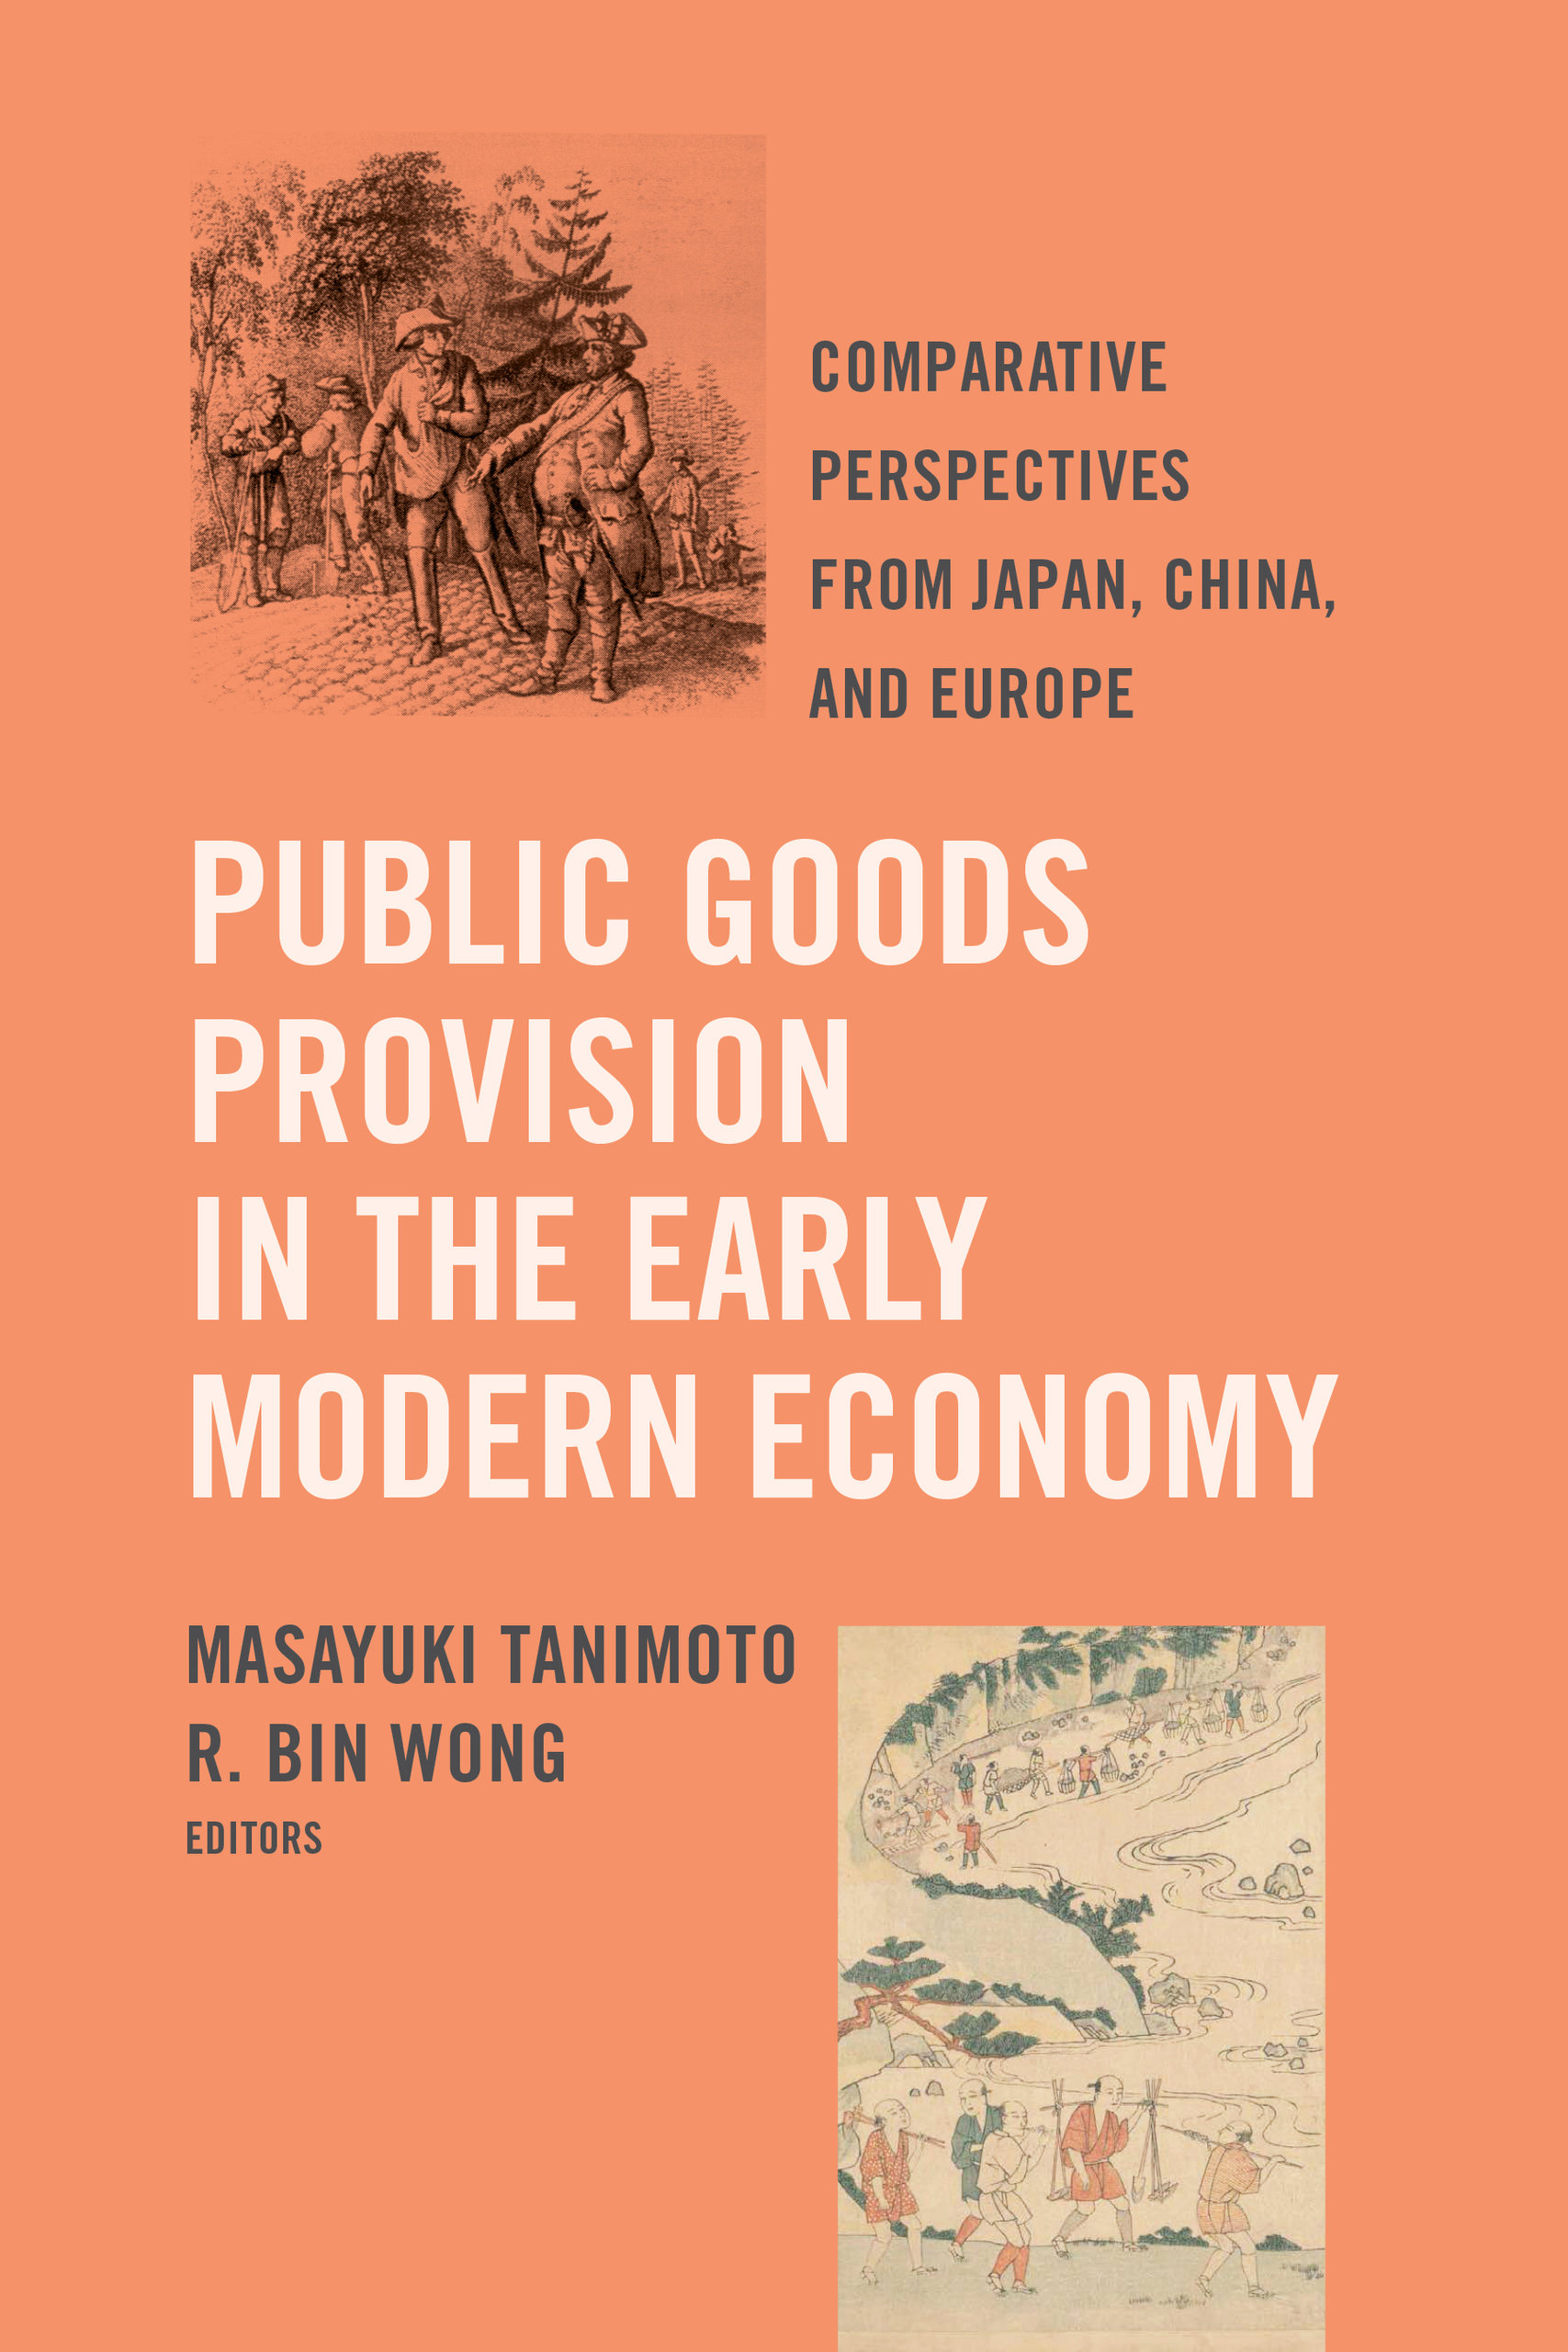 UTokyo BiblioPlaza - Public Goods Provision in the Early Modern